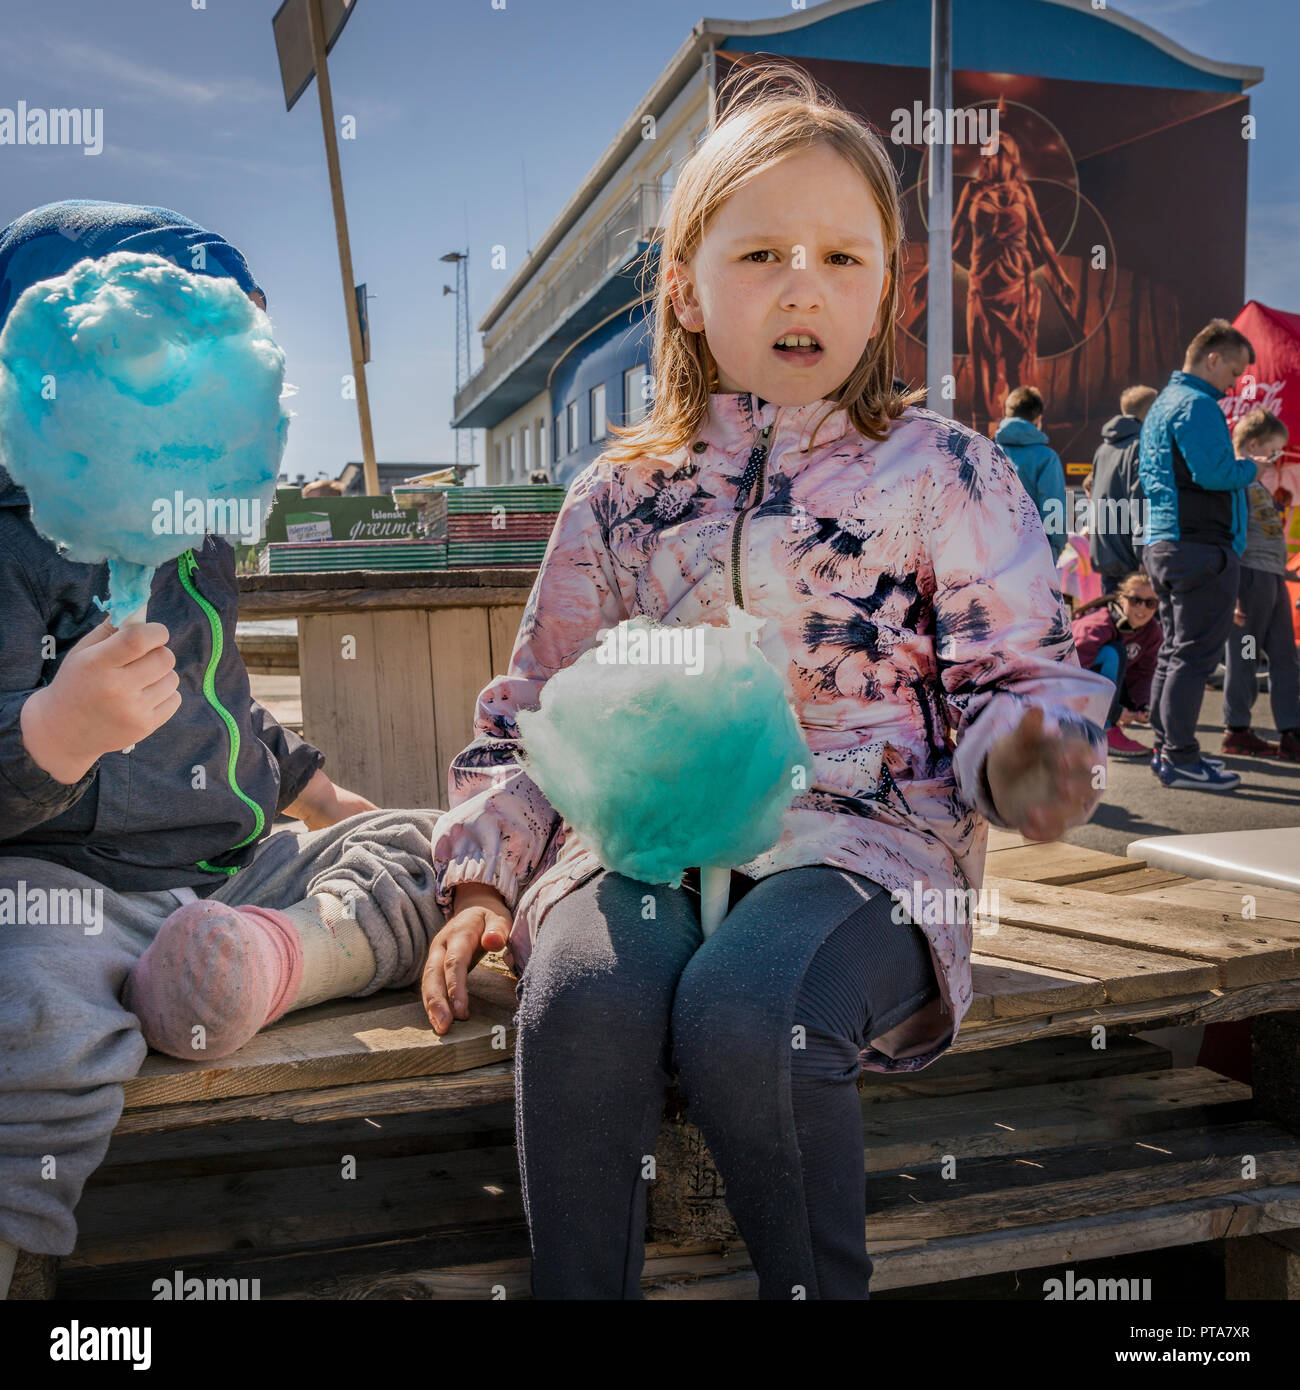 Children eating cotton candy, Seaman's Day, Reykjavik, Iceland. Stock Photo